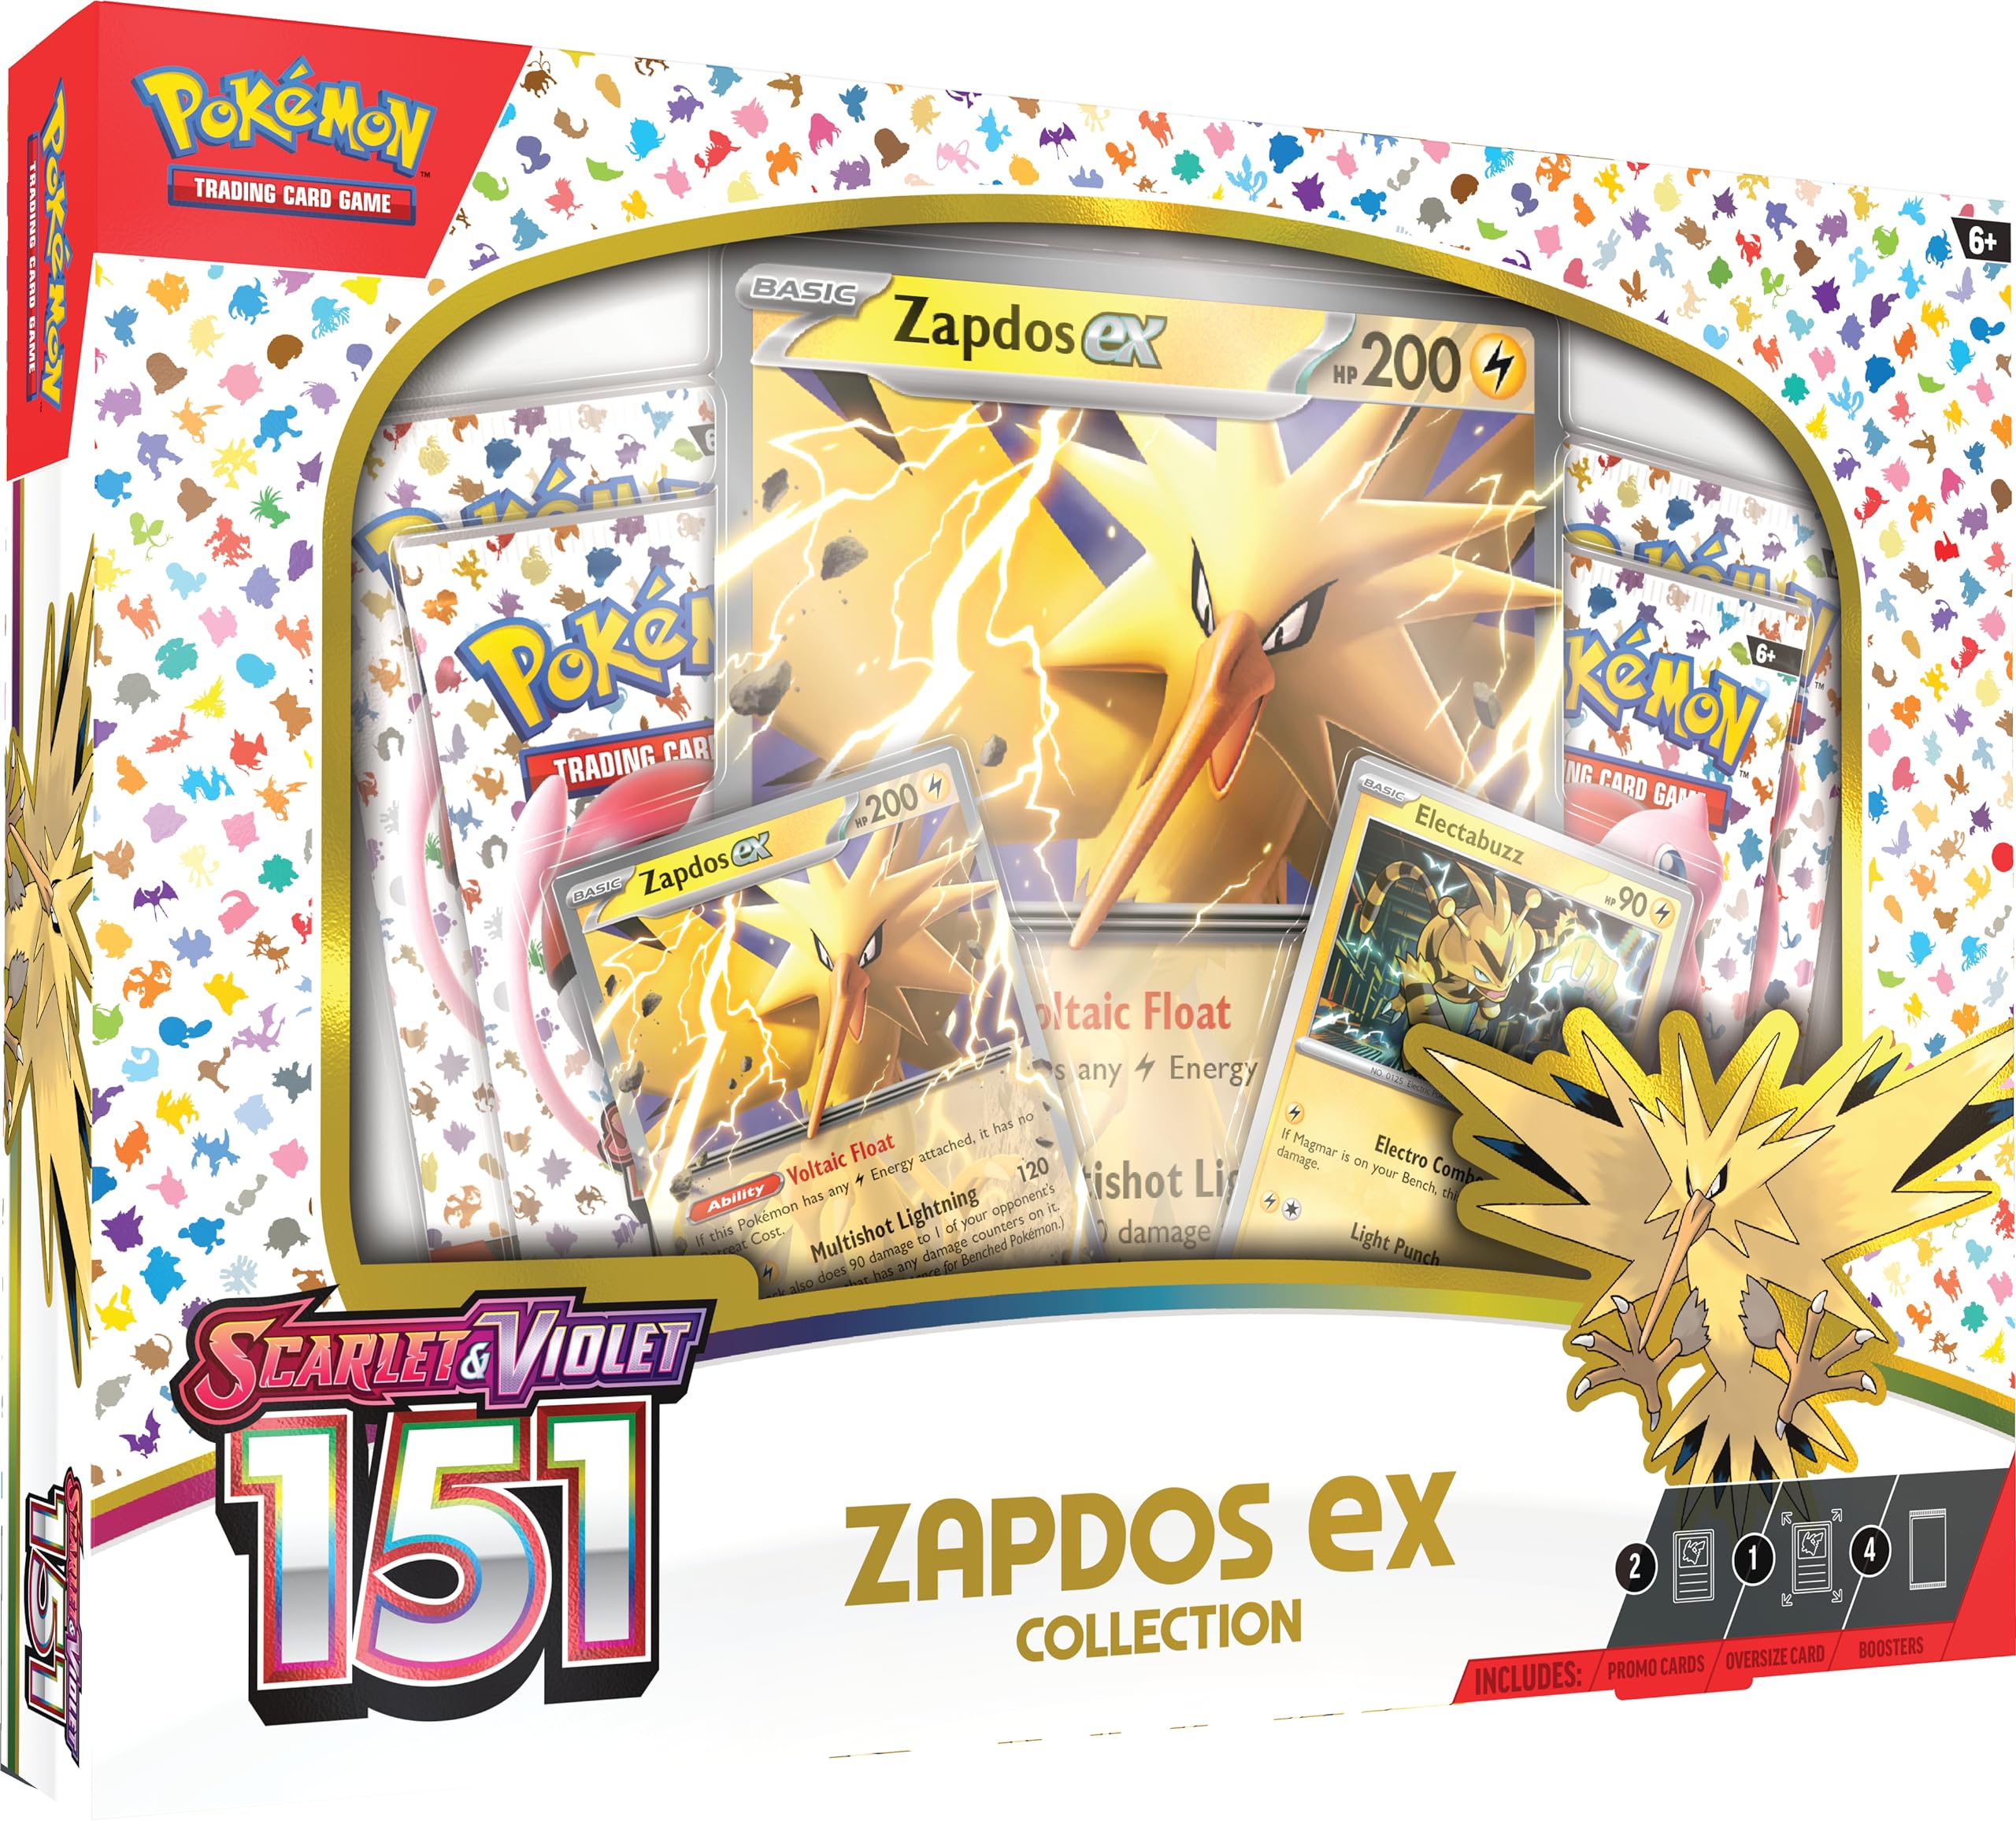 Pokemon Trading Card Game Pokemon Scarlet & Violet 151 Zapdos EX Collection